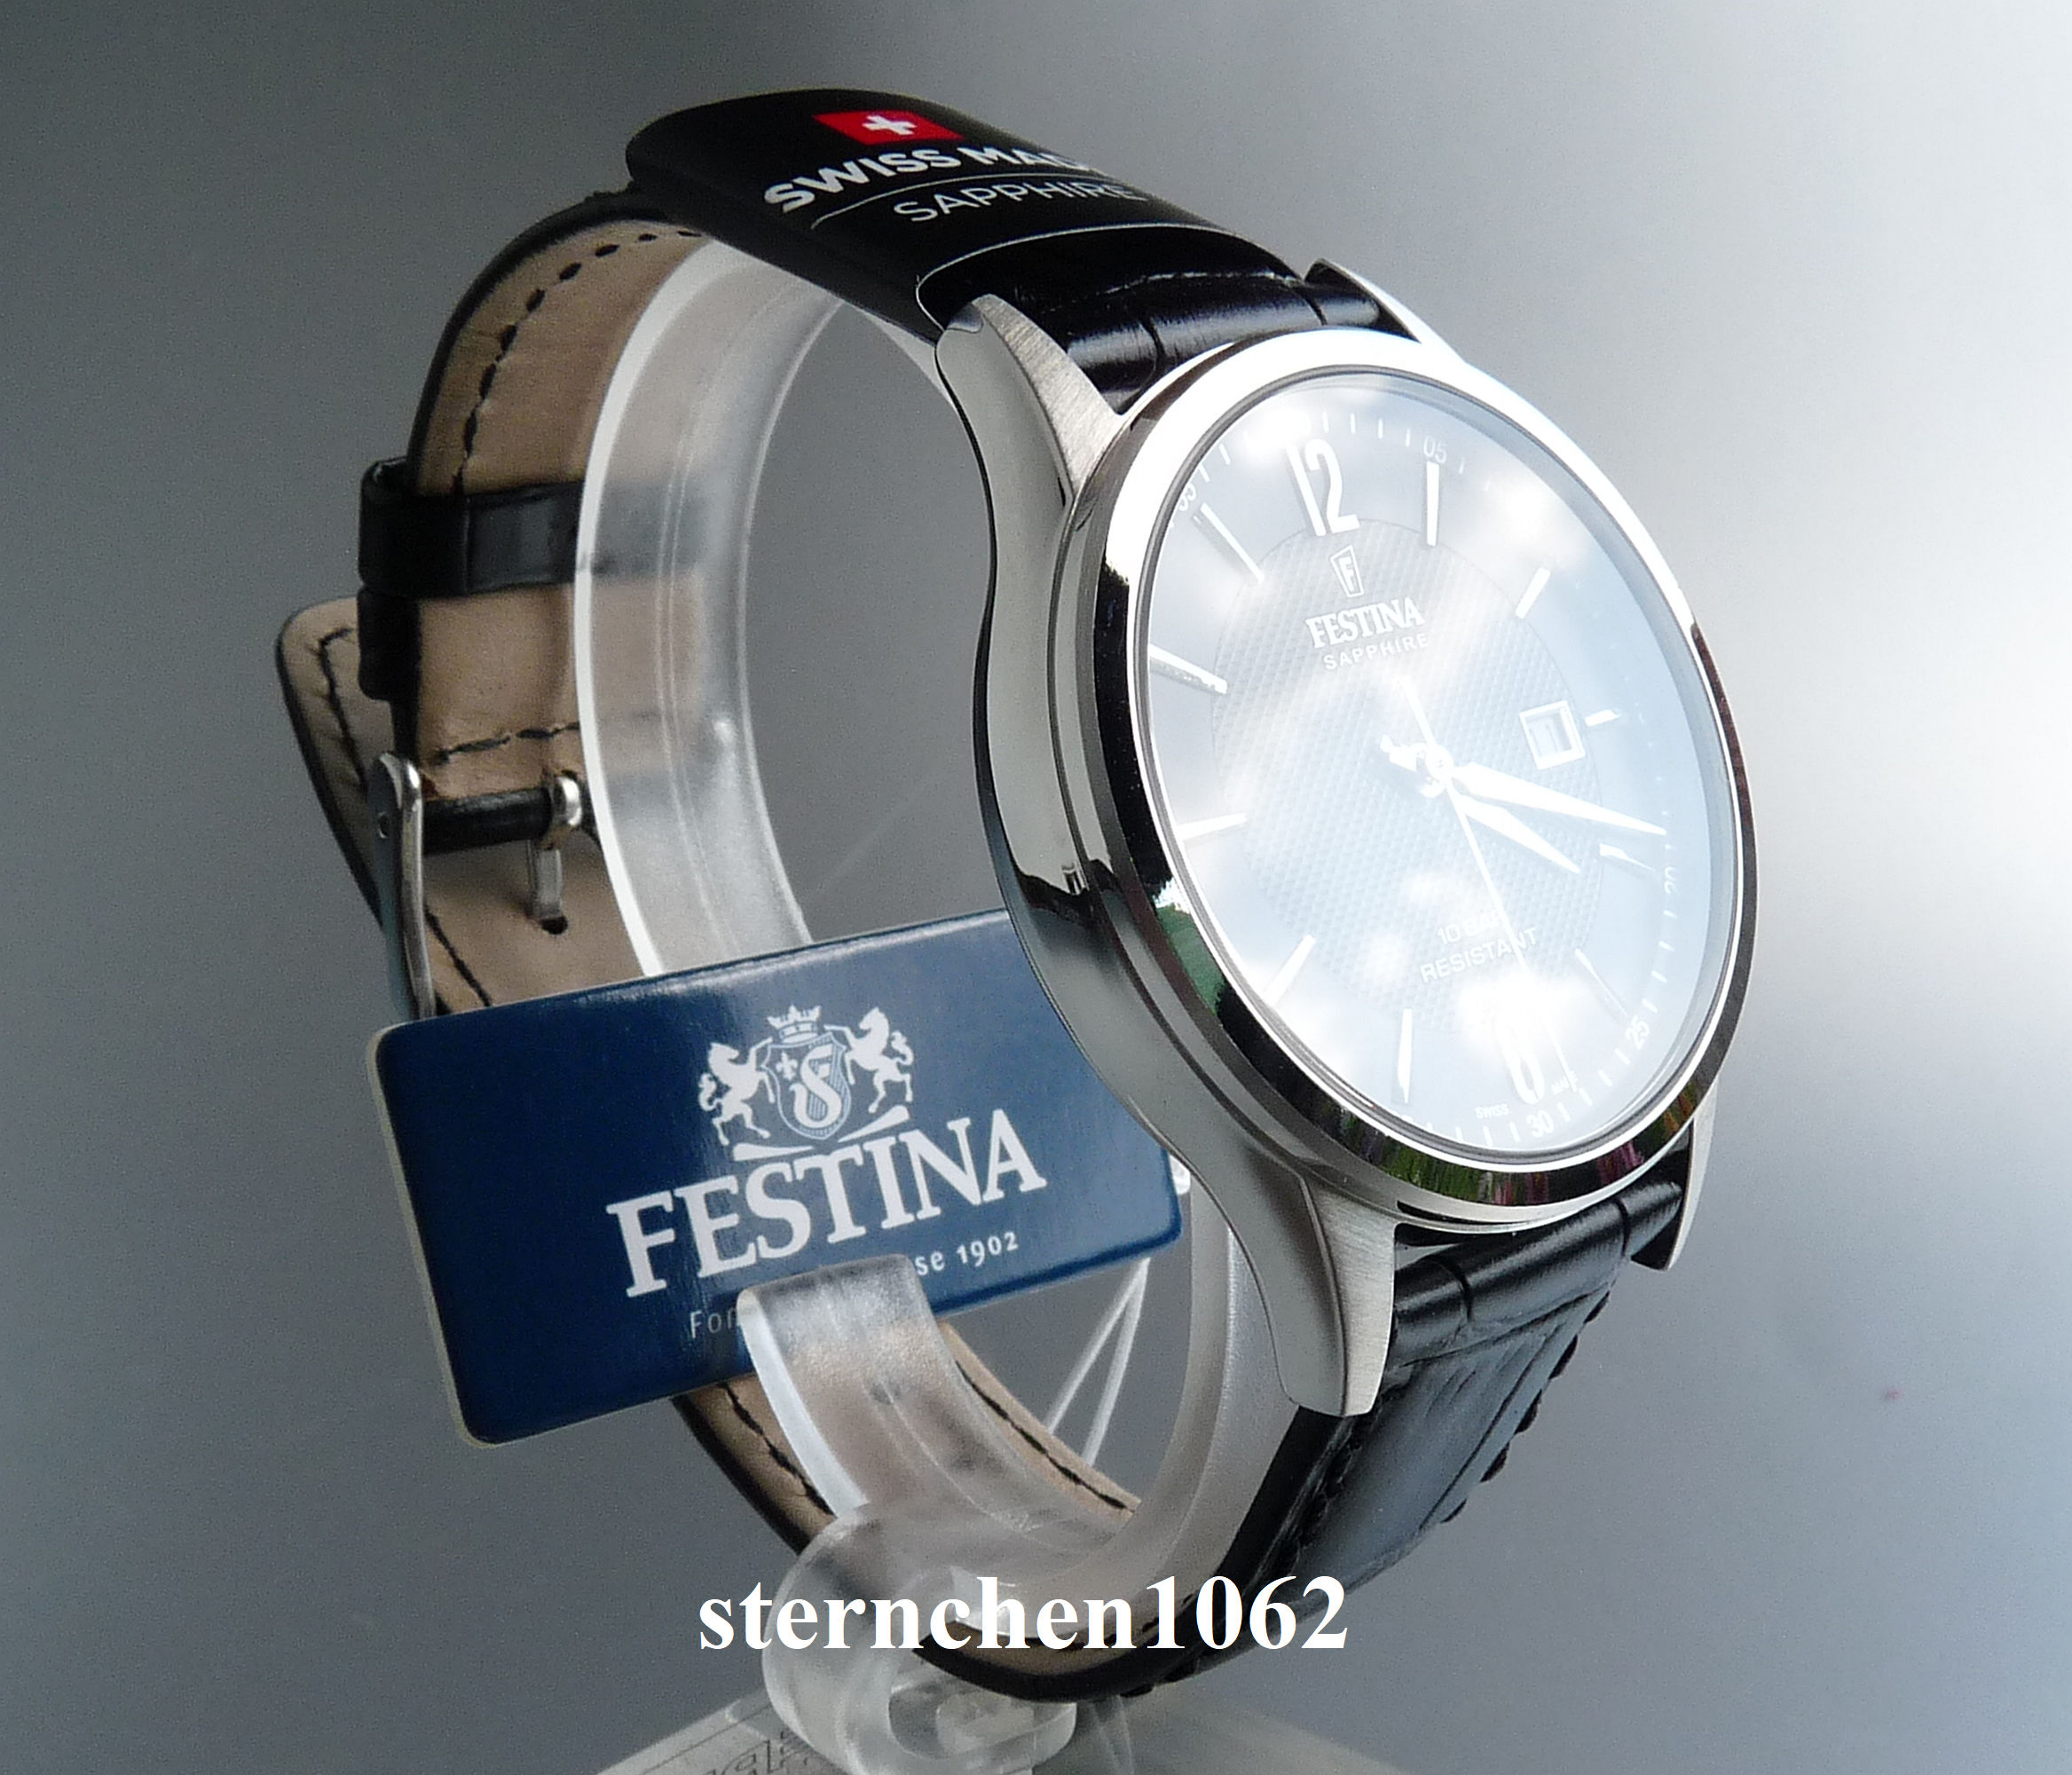 Festina Swiss - * Made Sternchen 1062 * F20007/4 *